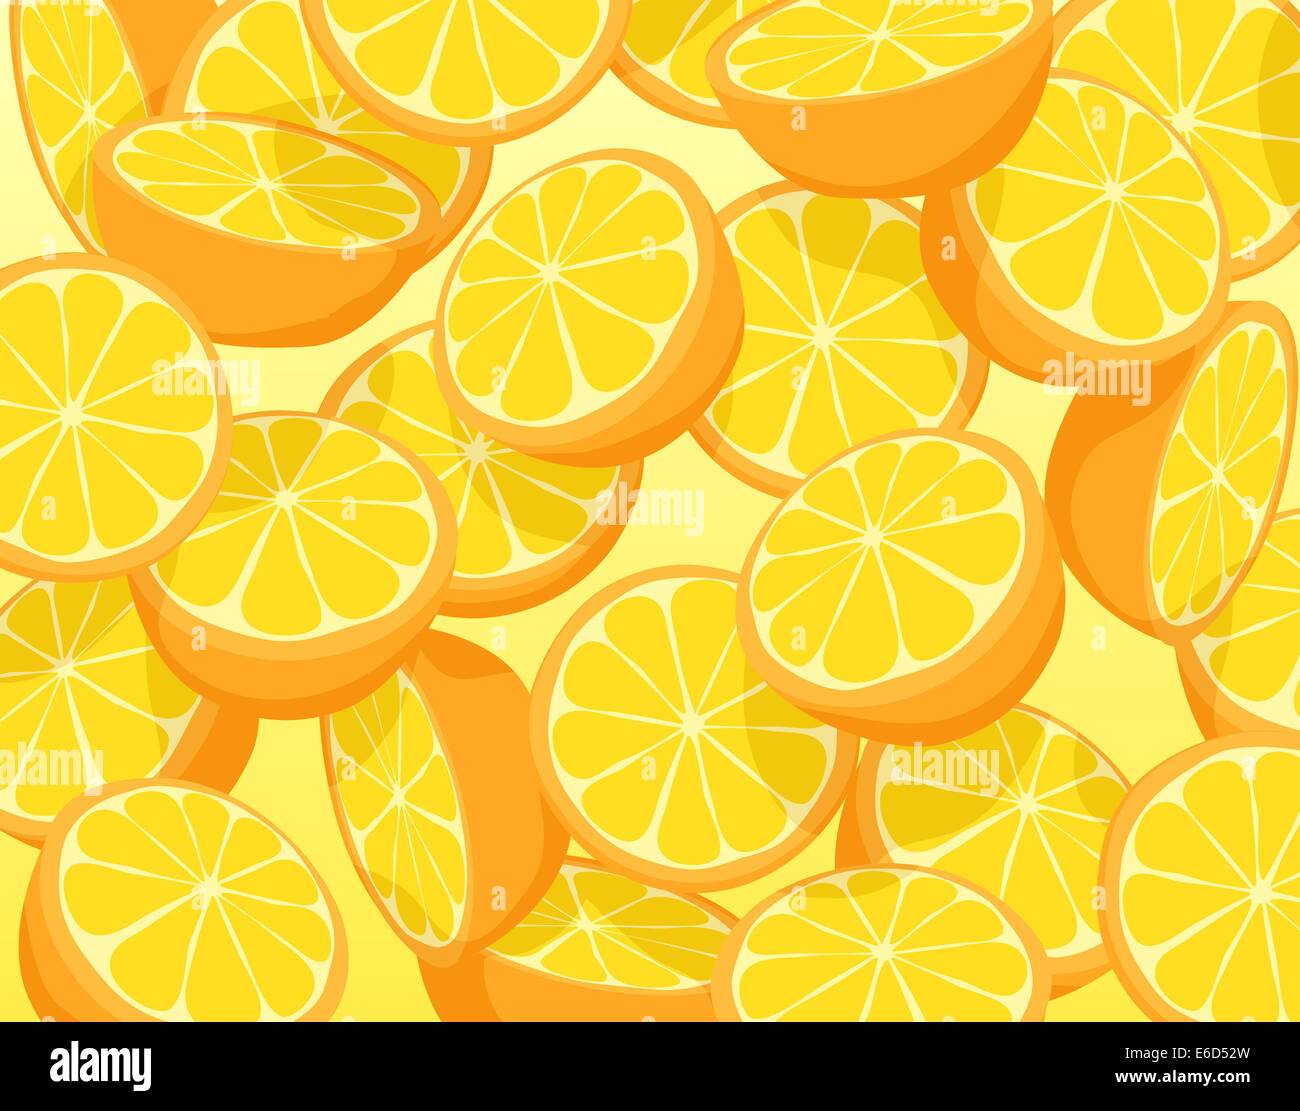 Bearbeitbares Vektor-Illustration des Fallens in Scheiben geschnittenen Orangen Stock Vektor